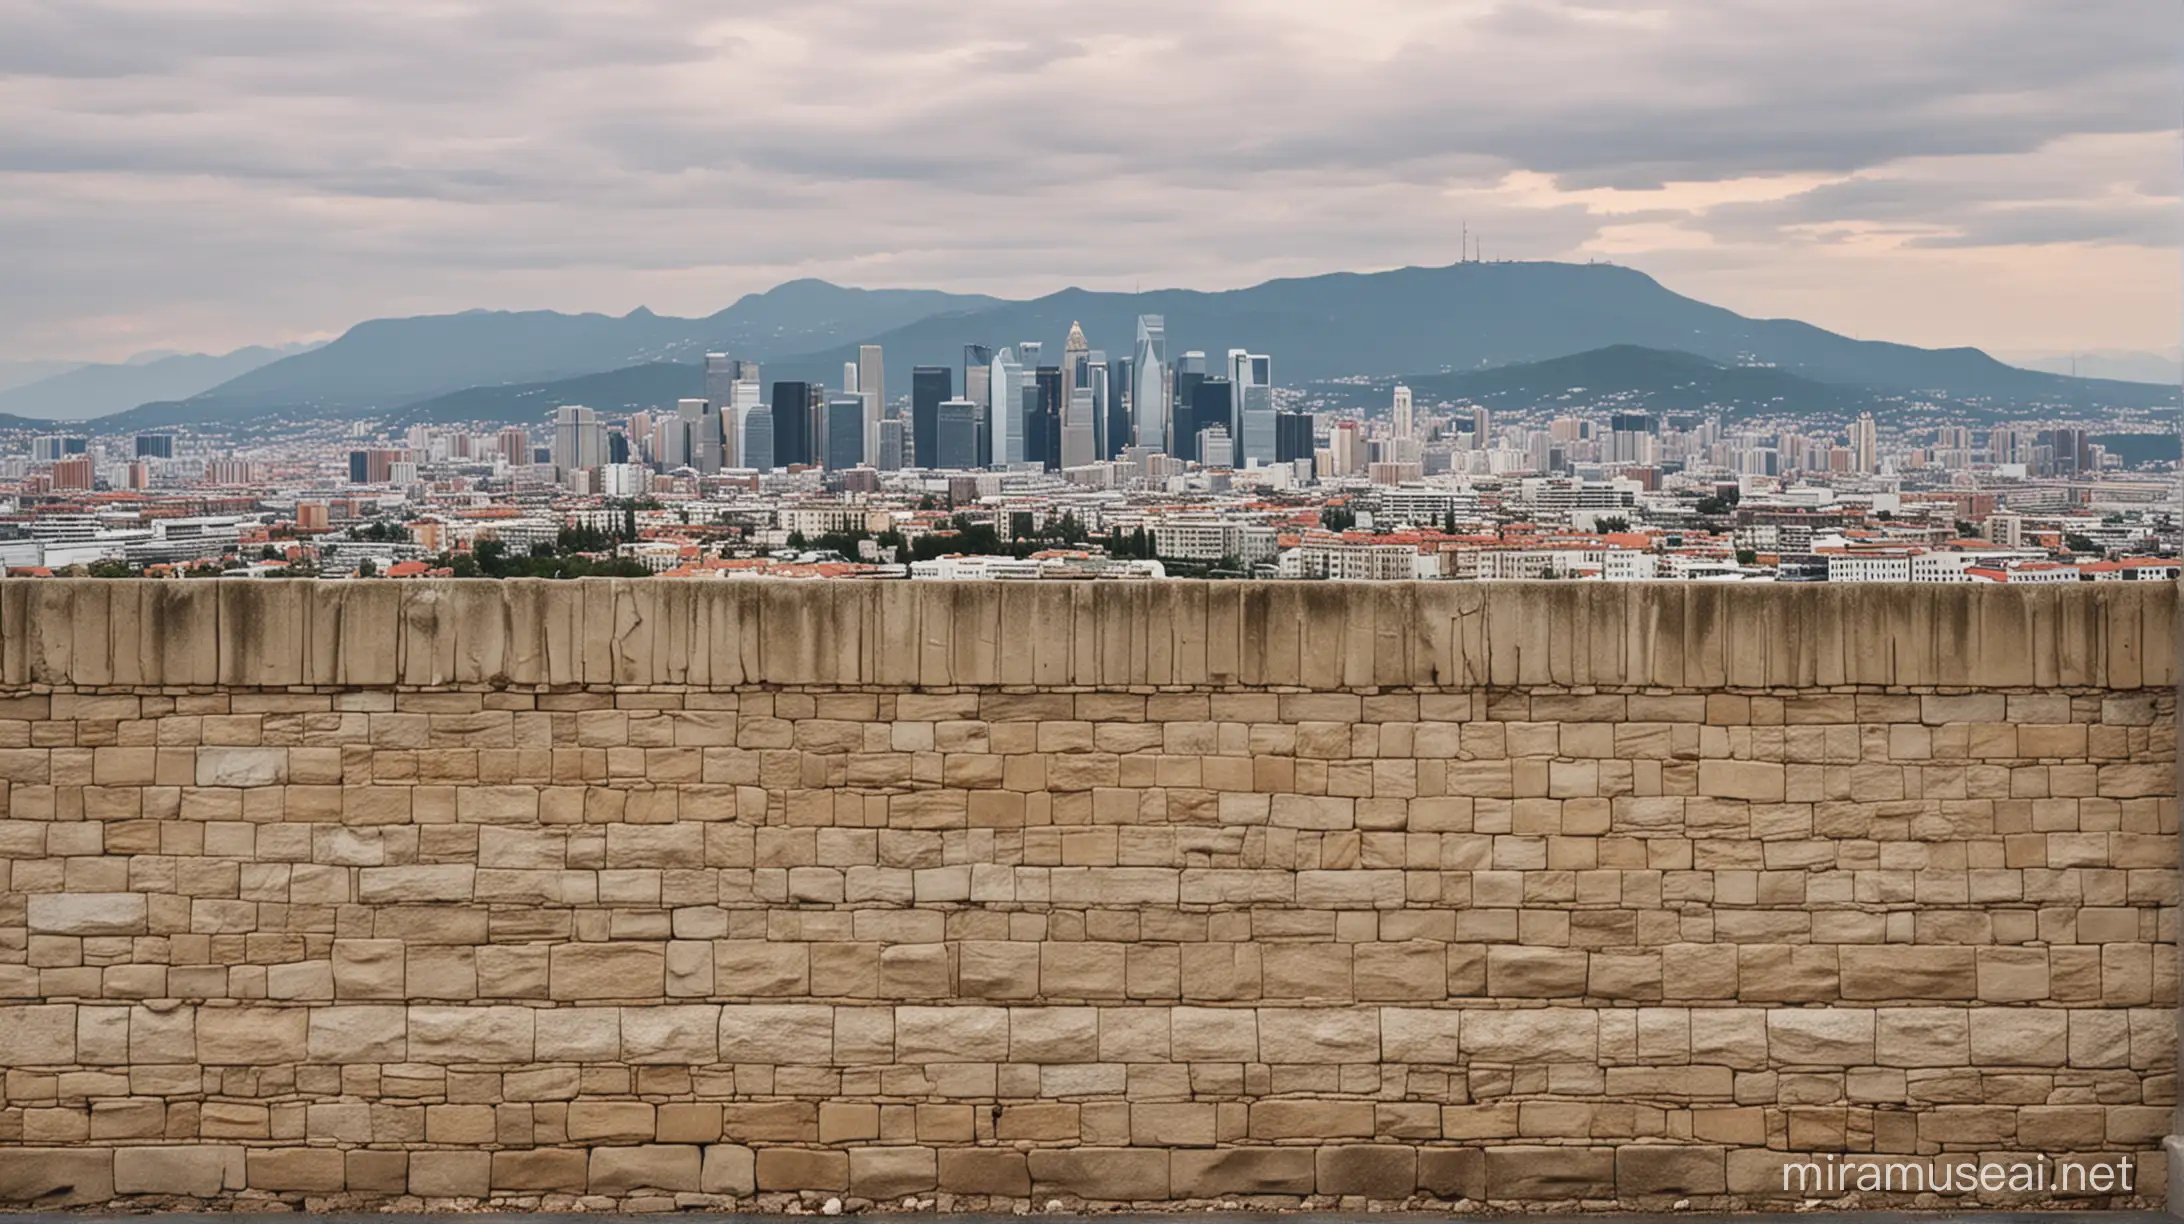 Urban Landscape City Skyline Behind a Brick Wall